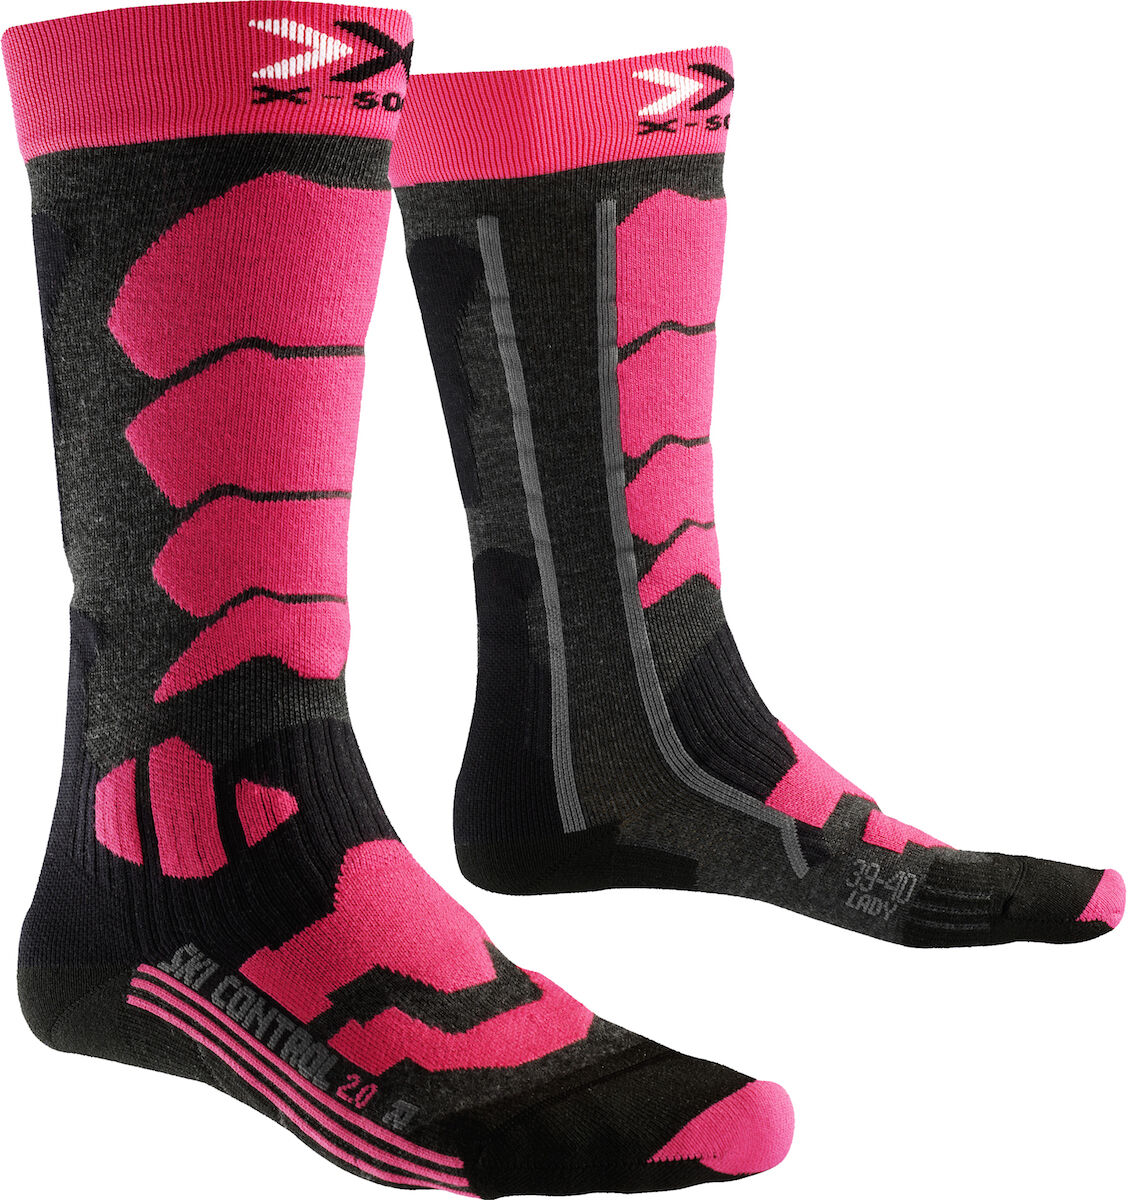 X-Socks - Ski Control Lady 2.0 - Ski socks - Women's